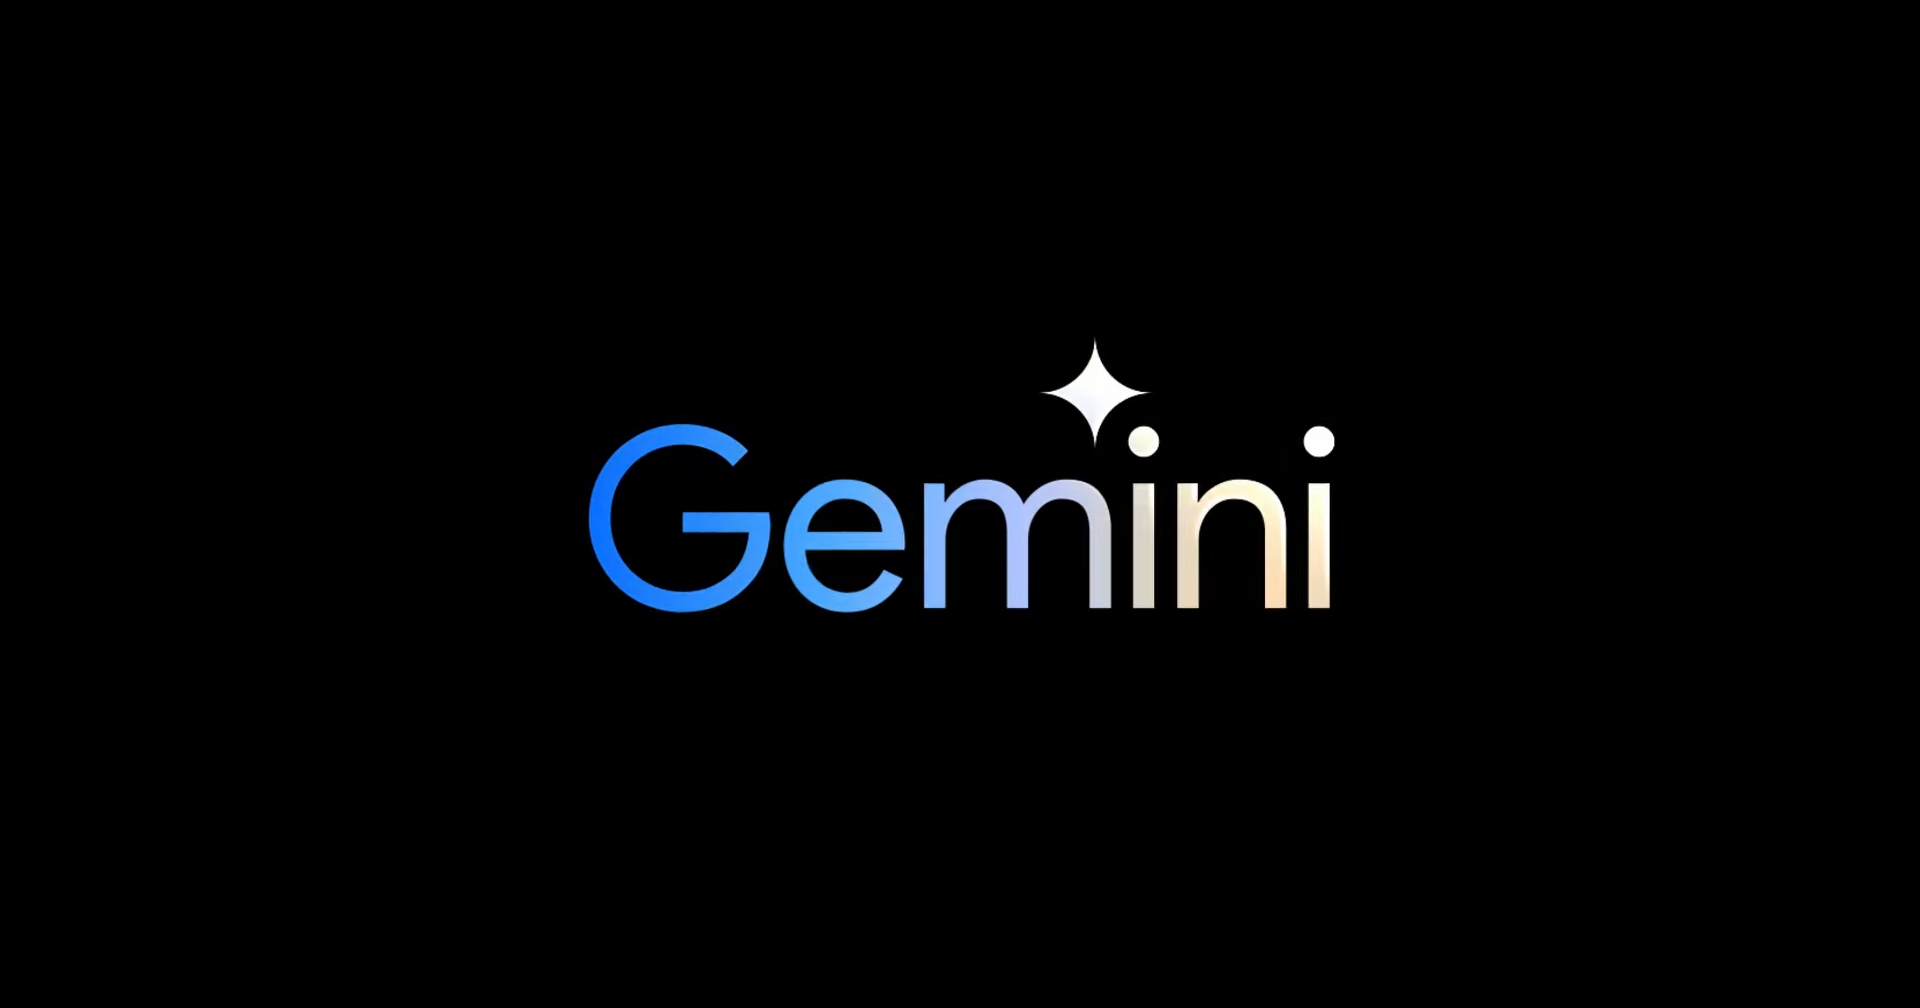 Google DeepMind เปิดตัวโมเดล Gemini 1.0 แล้ว มาพร้อมกันถึง 3 รุ่น!